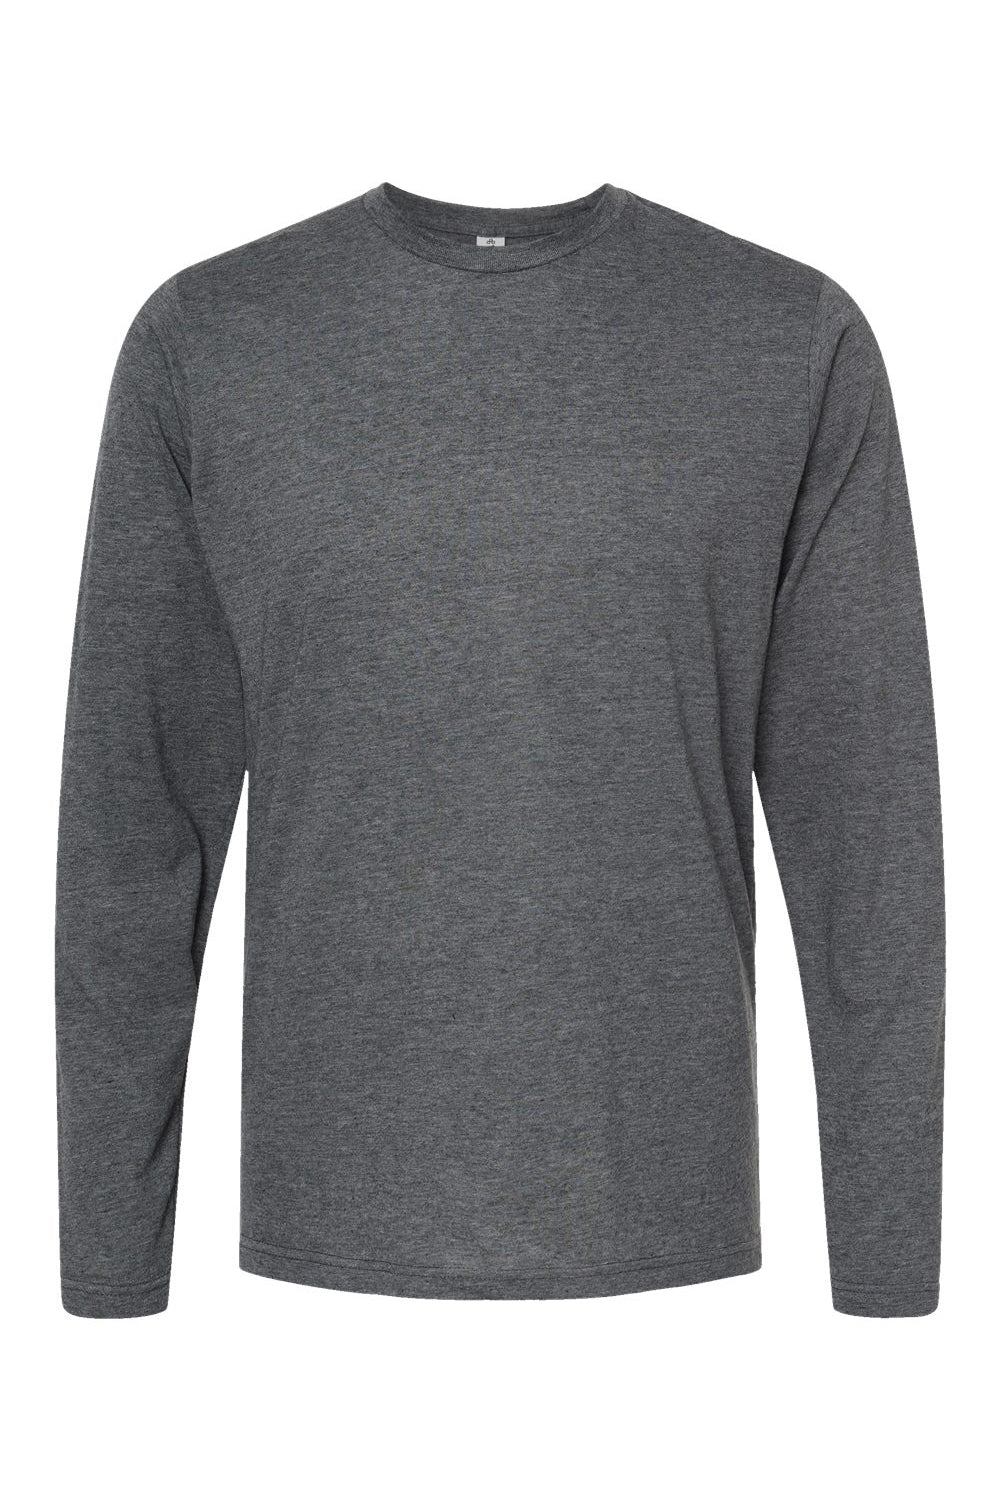 Tultex 242 Mens Poly-Rich Long Sleeve Crewneck T-Shirt Heather Charcoal Grey Flat Front